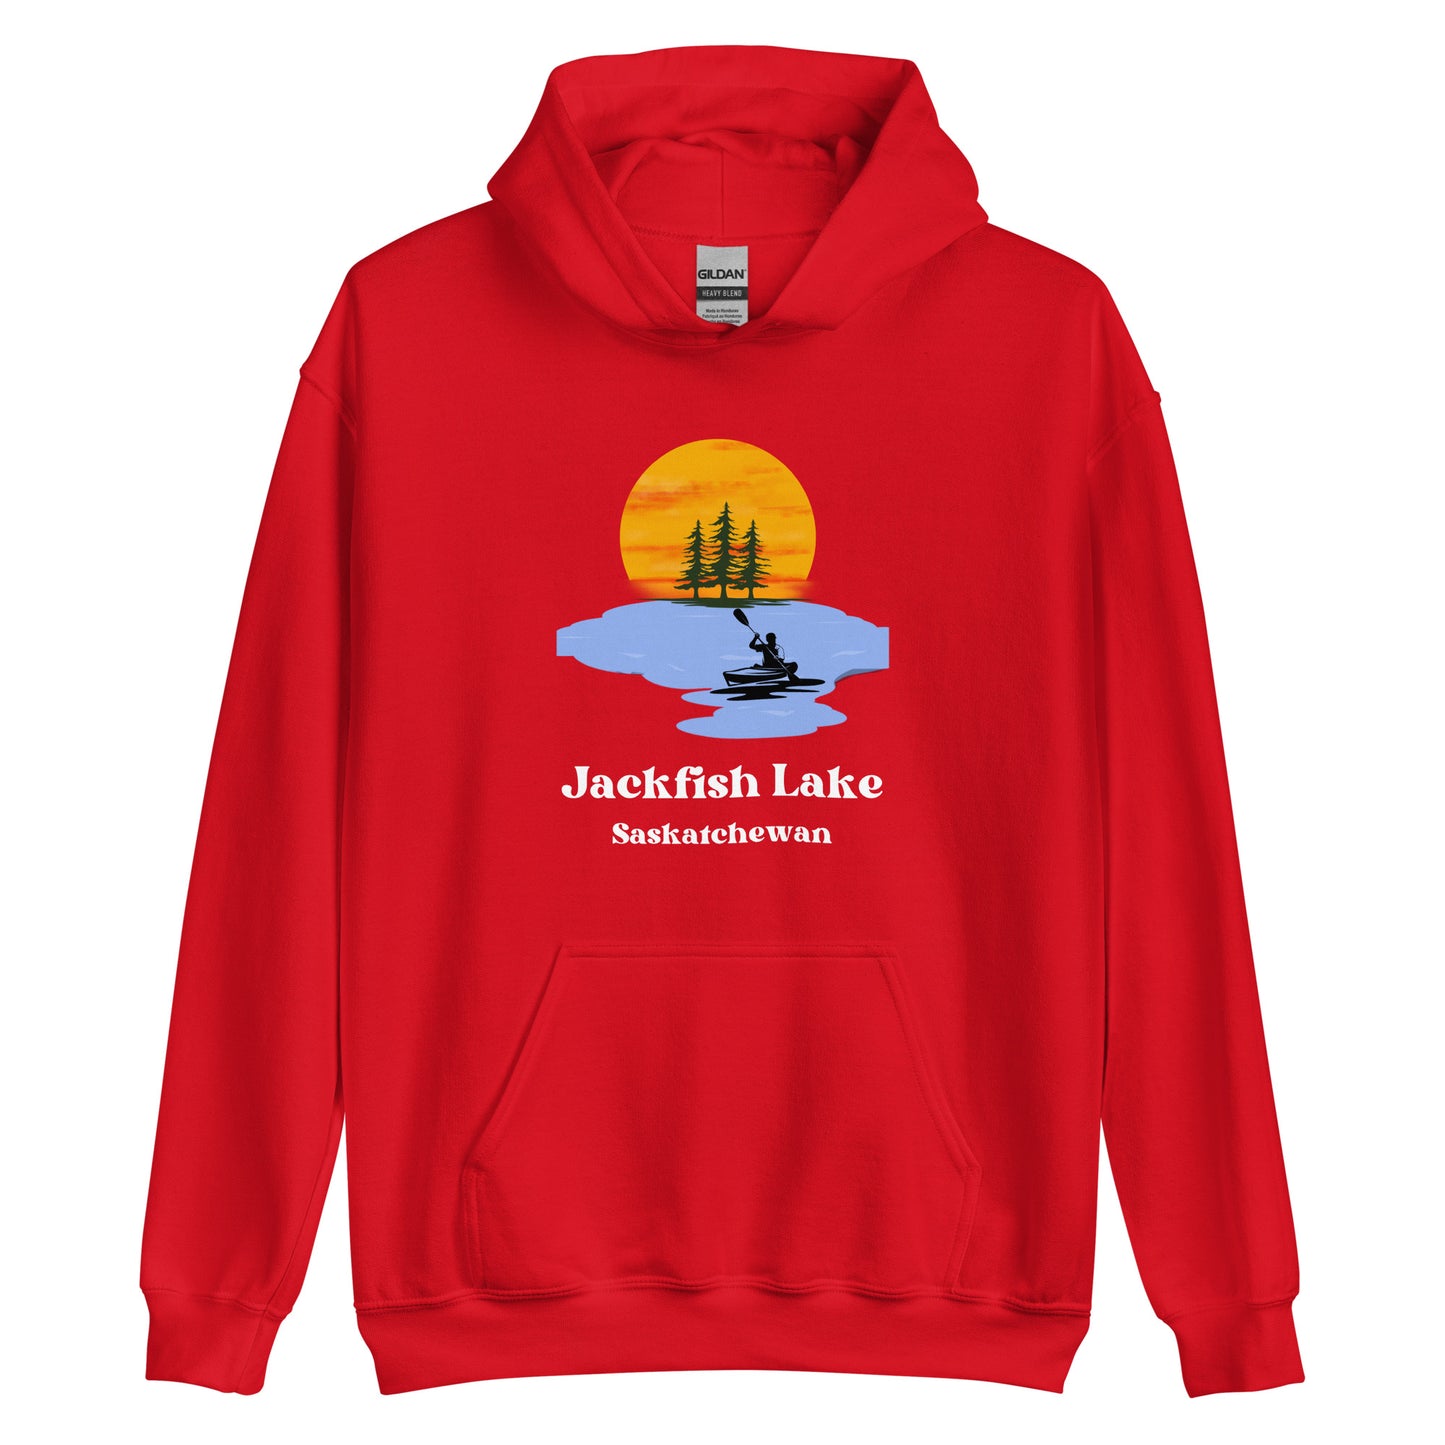 Jackfish Lake, SK - Unisex Hoodie - Kayak